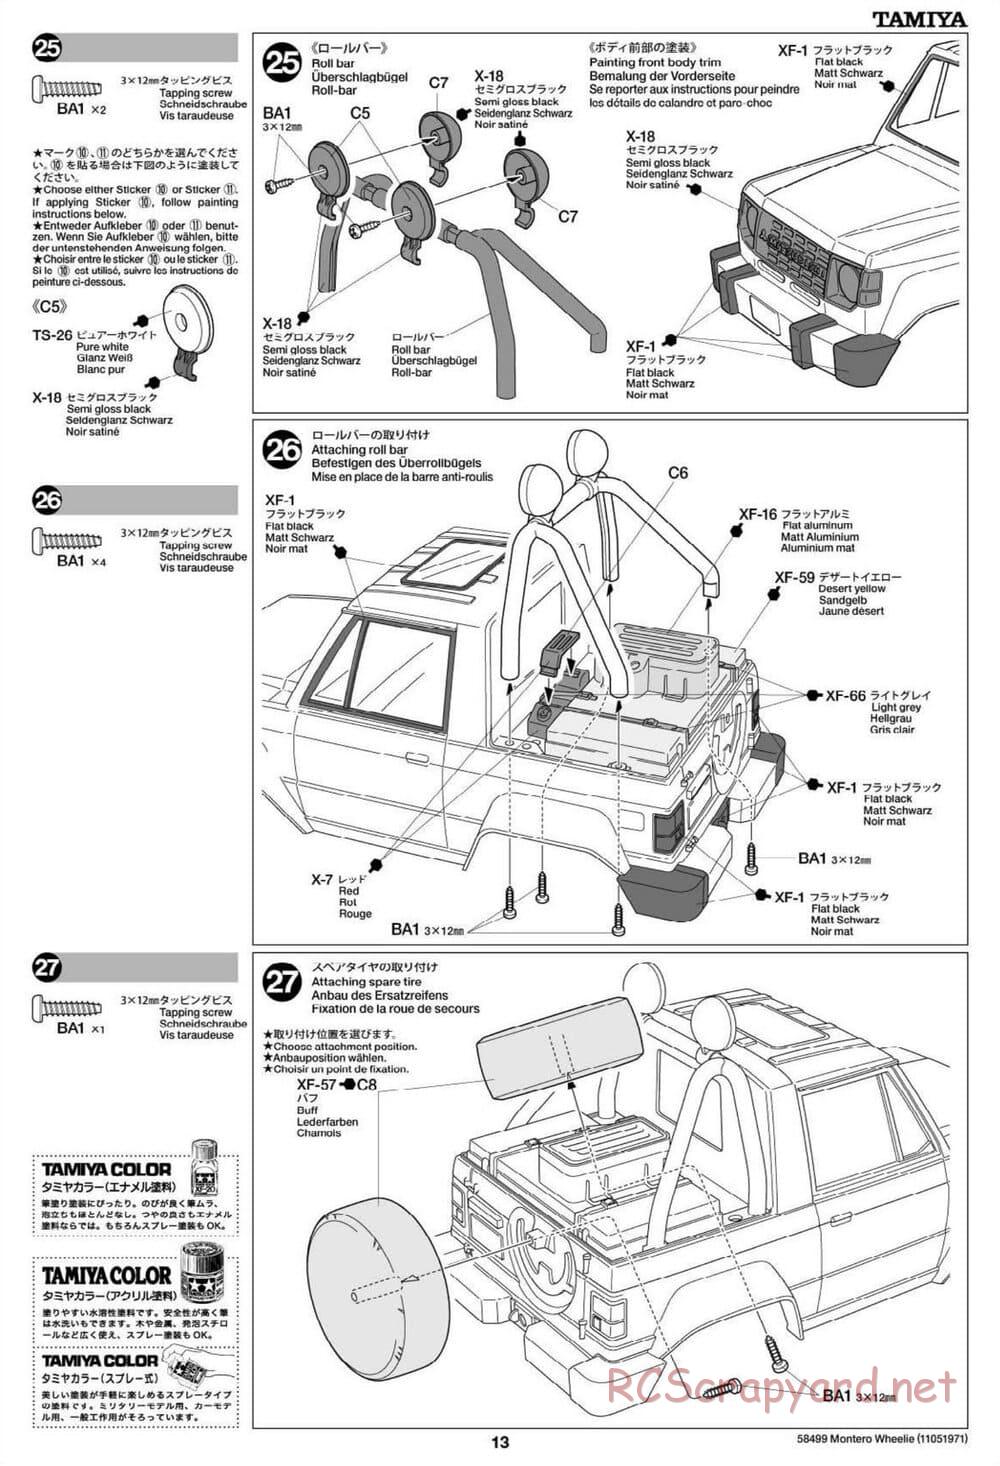 Tamiya - Mitsubishi Montero Wheelie - CW-01 Chassis - Manual - Page 13